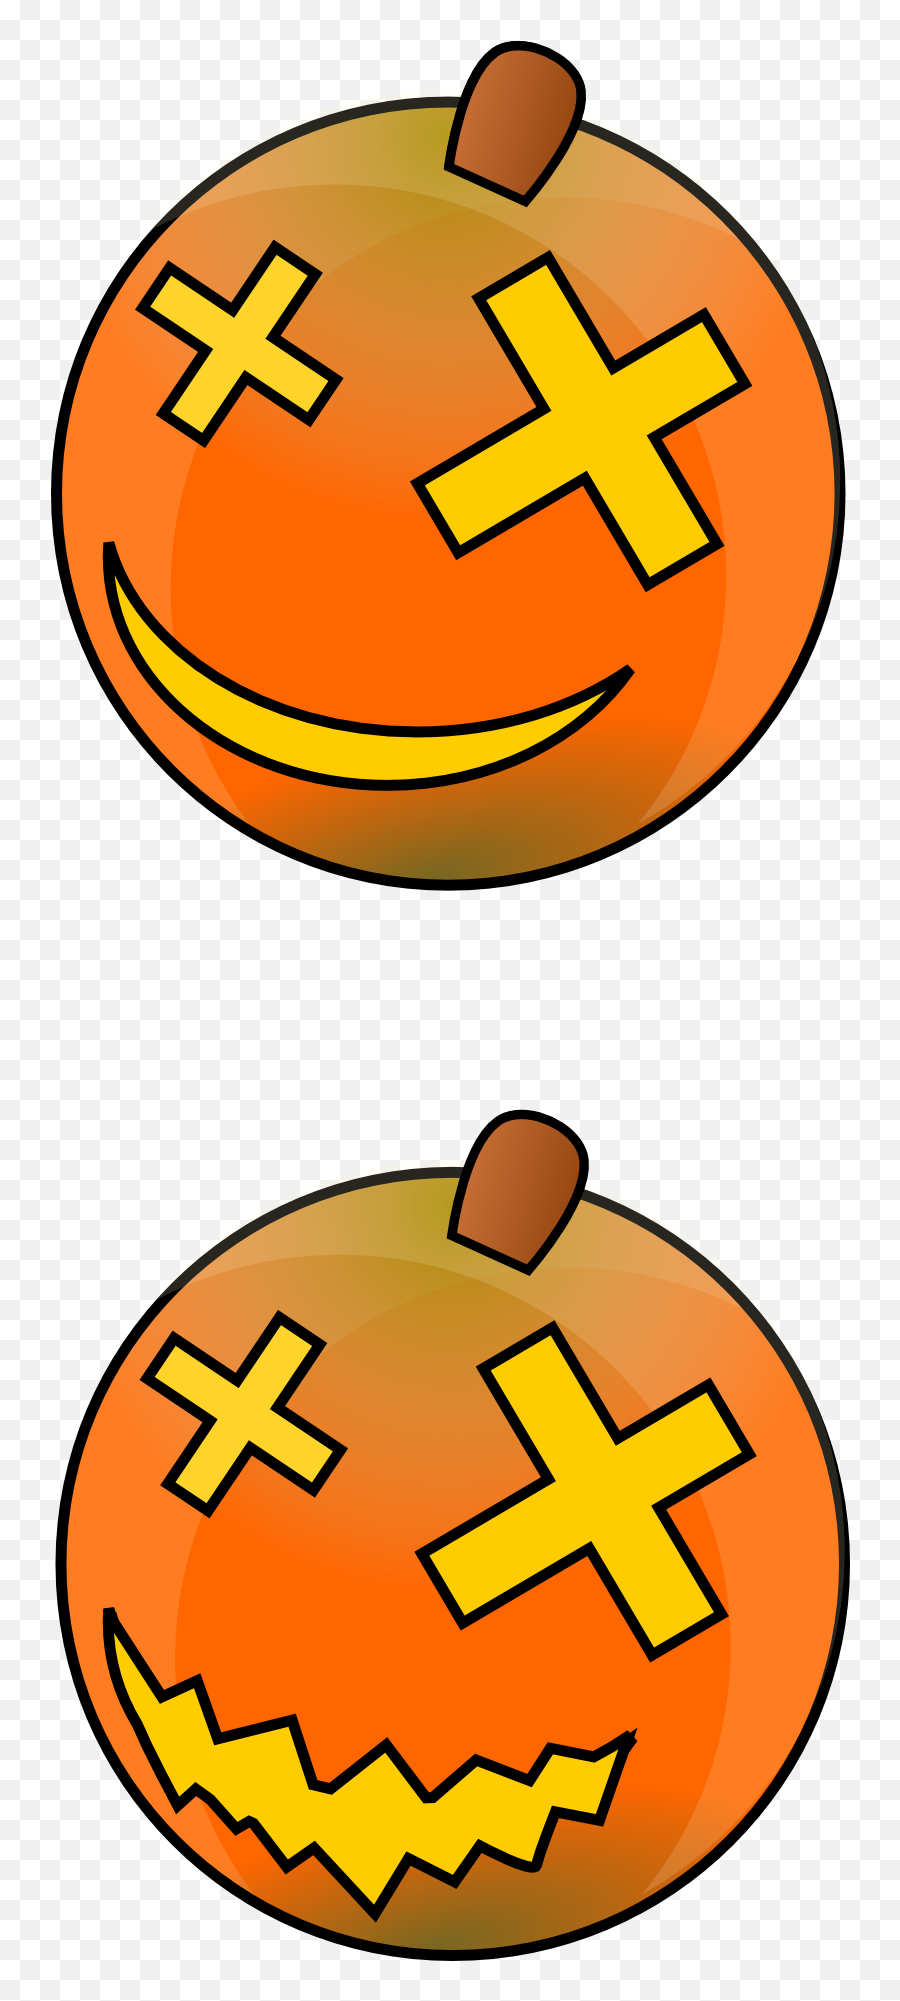 Pumpkin Face Smiling As An Illustration Free Image Download Emoji,Halloween Text Emoticon